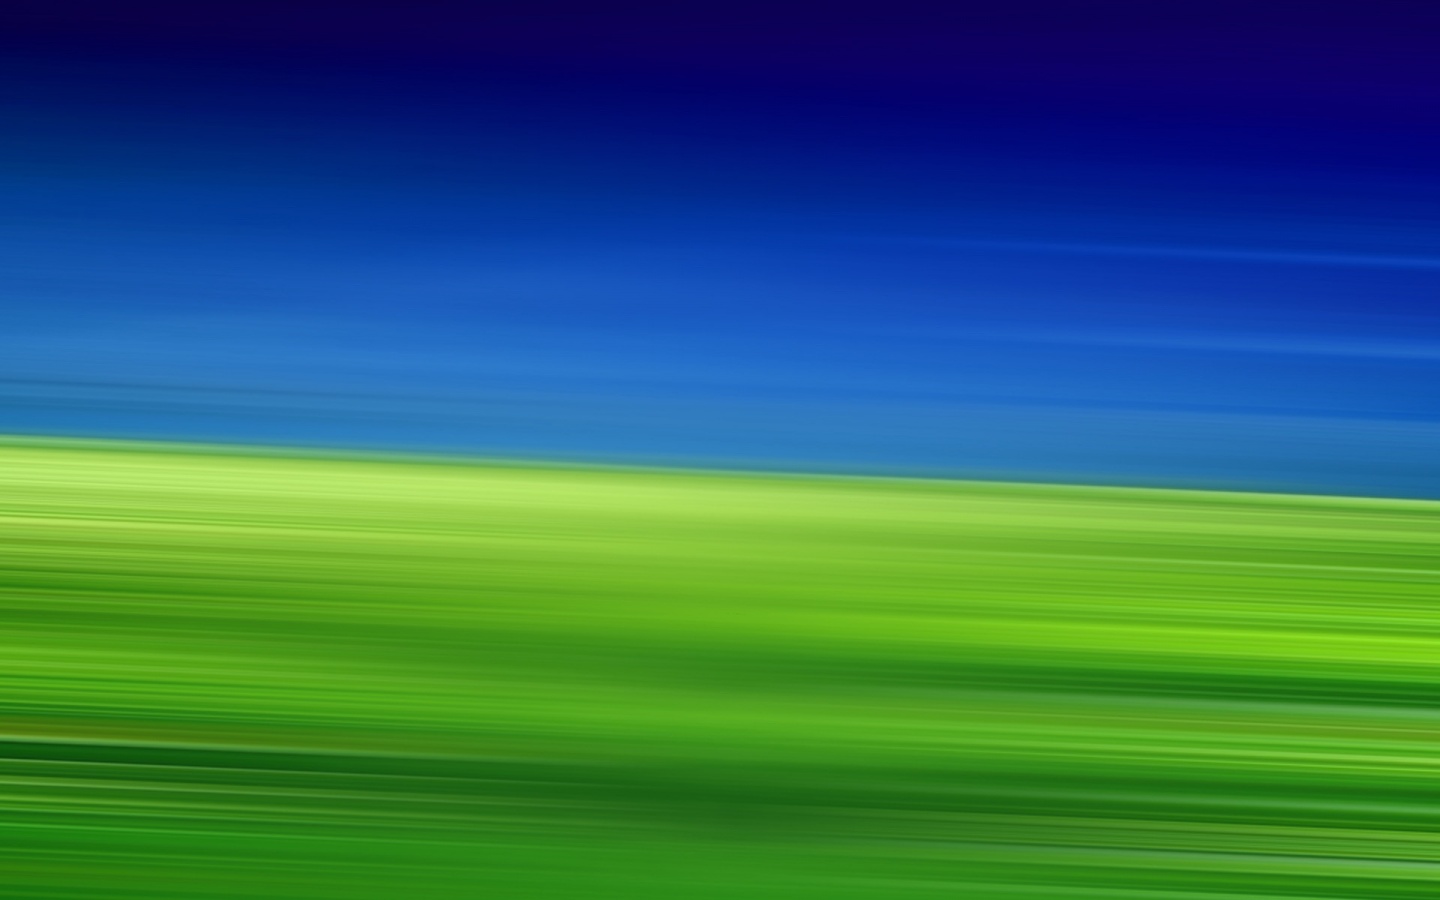 Download 1440x900 Green and Dark Blue desktop PC and Mac wallpaper